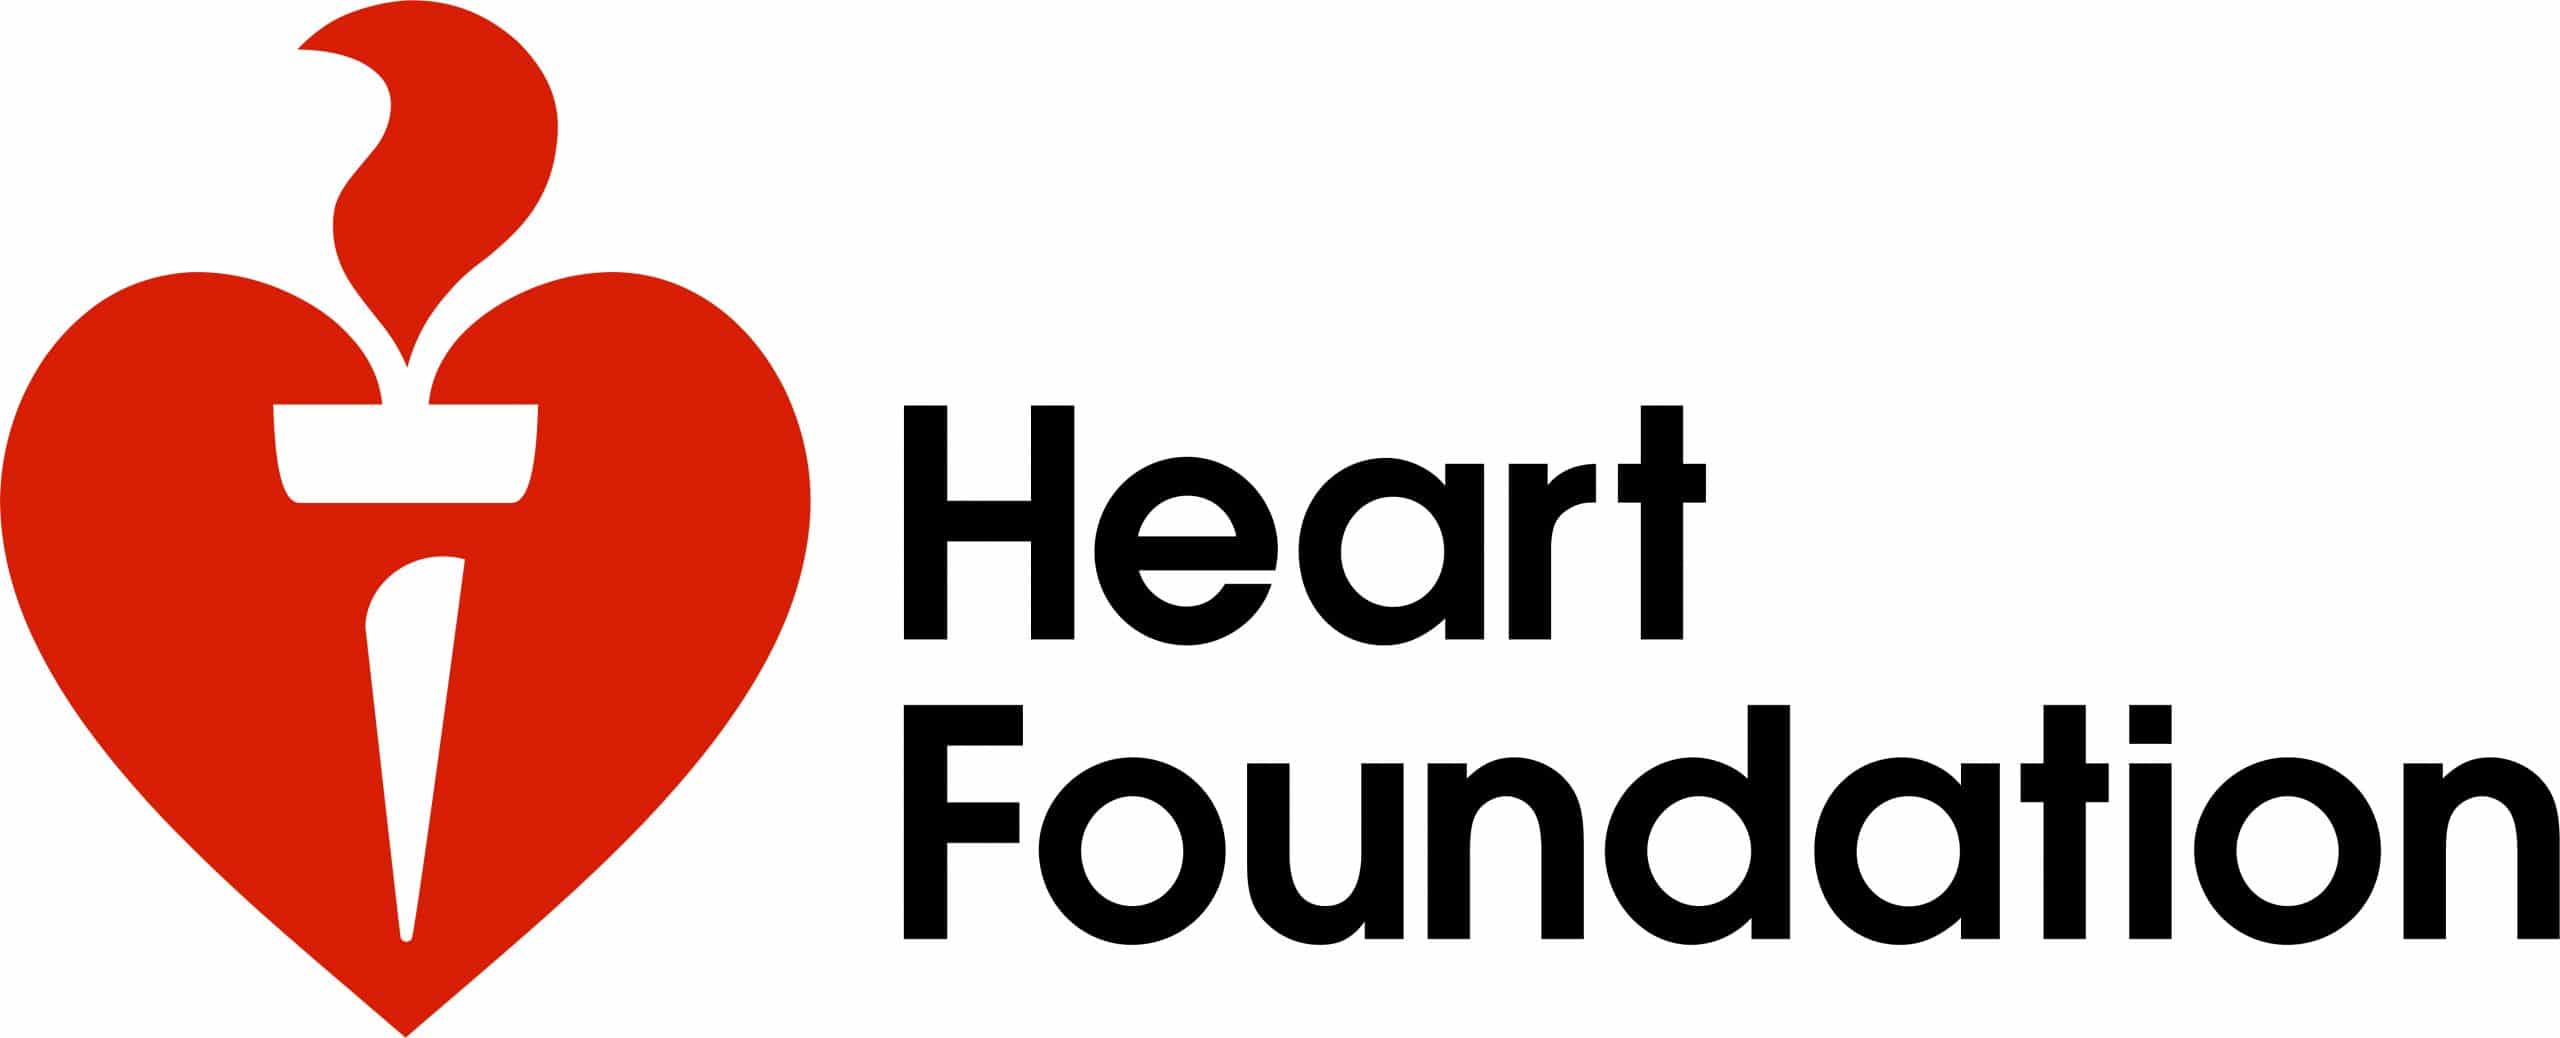 The heart foundation logo.